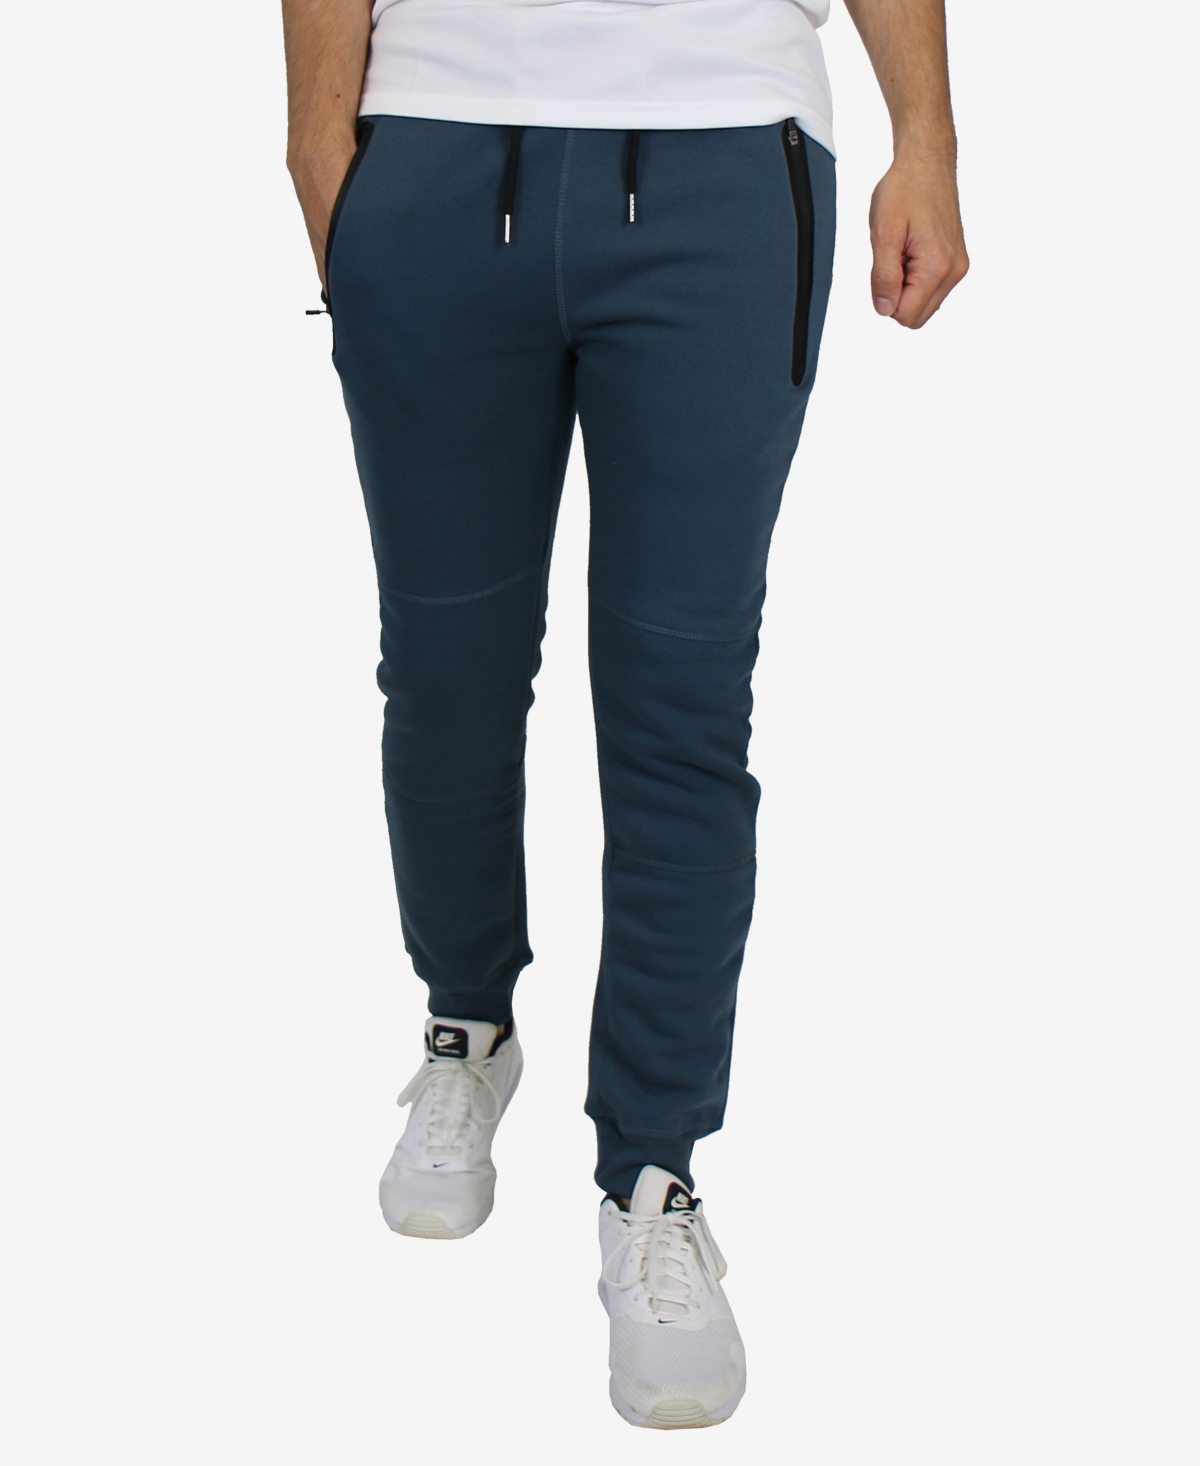 Men's Slim Fit Fleece Jogger Sweatpants with Heat Seal Zipper Pockets - Blue